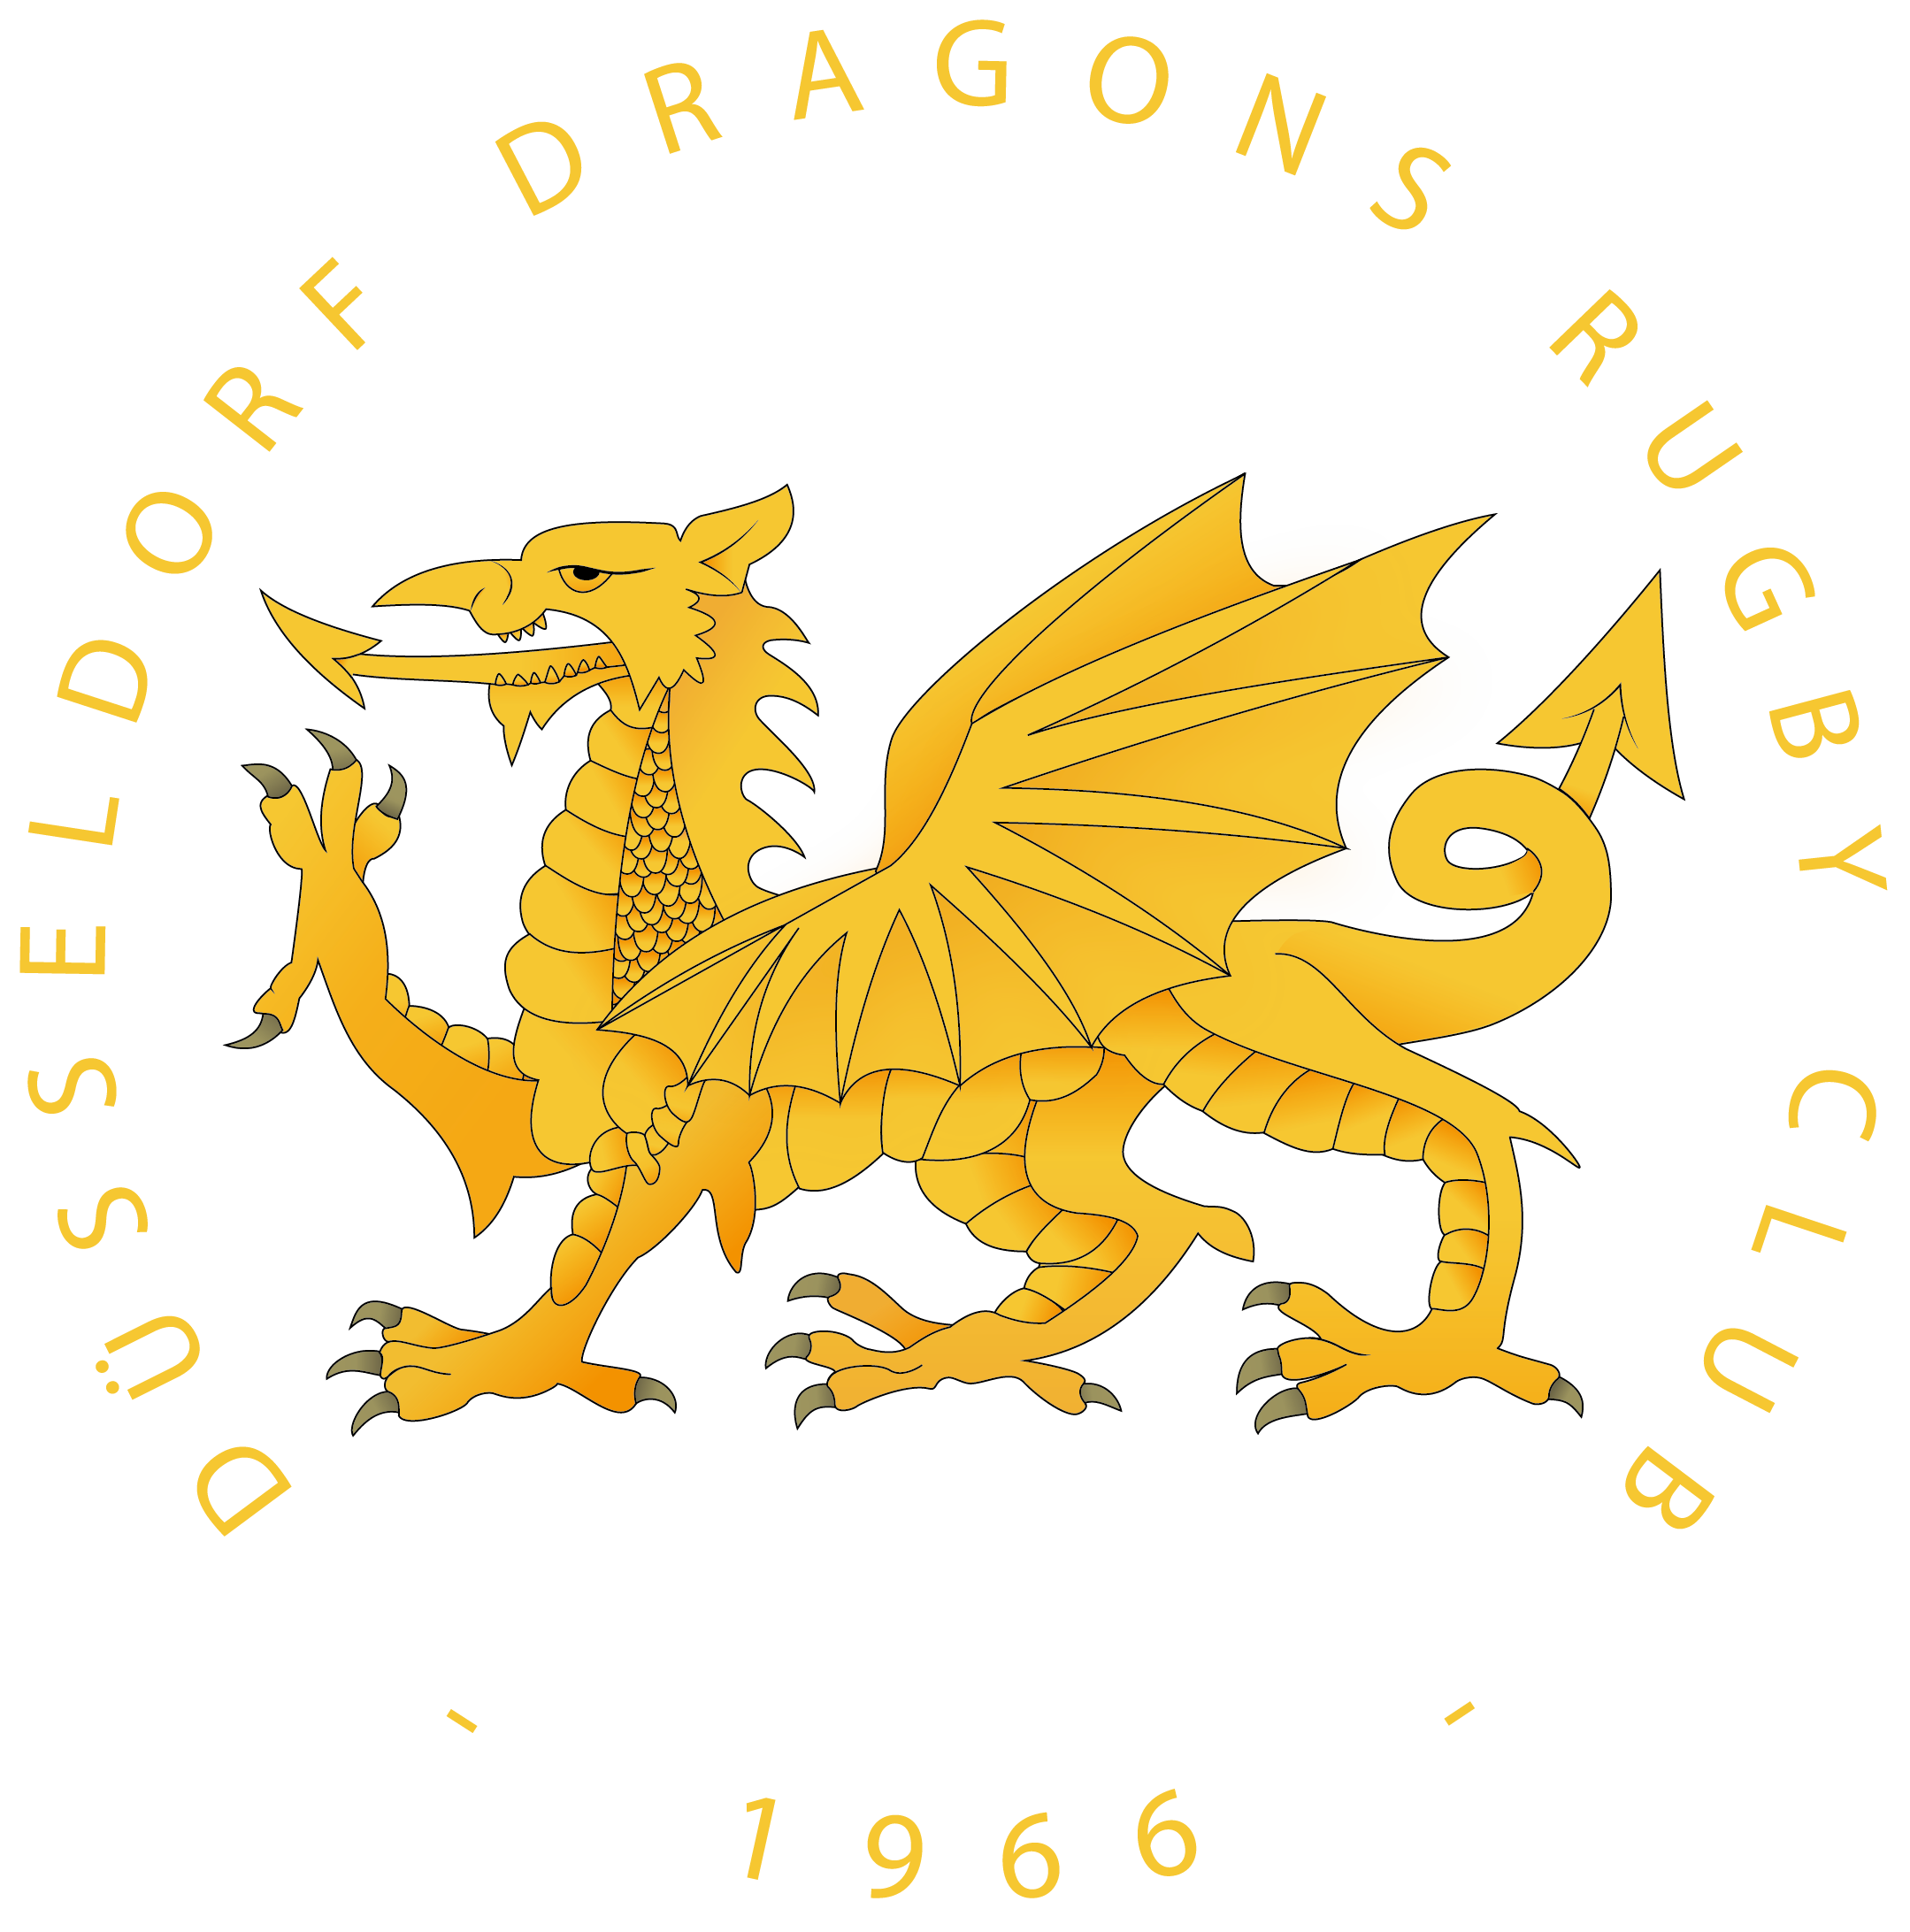 Düsseldorf Dragons